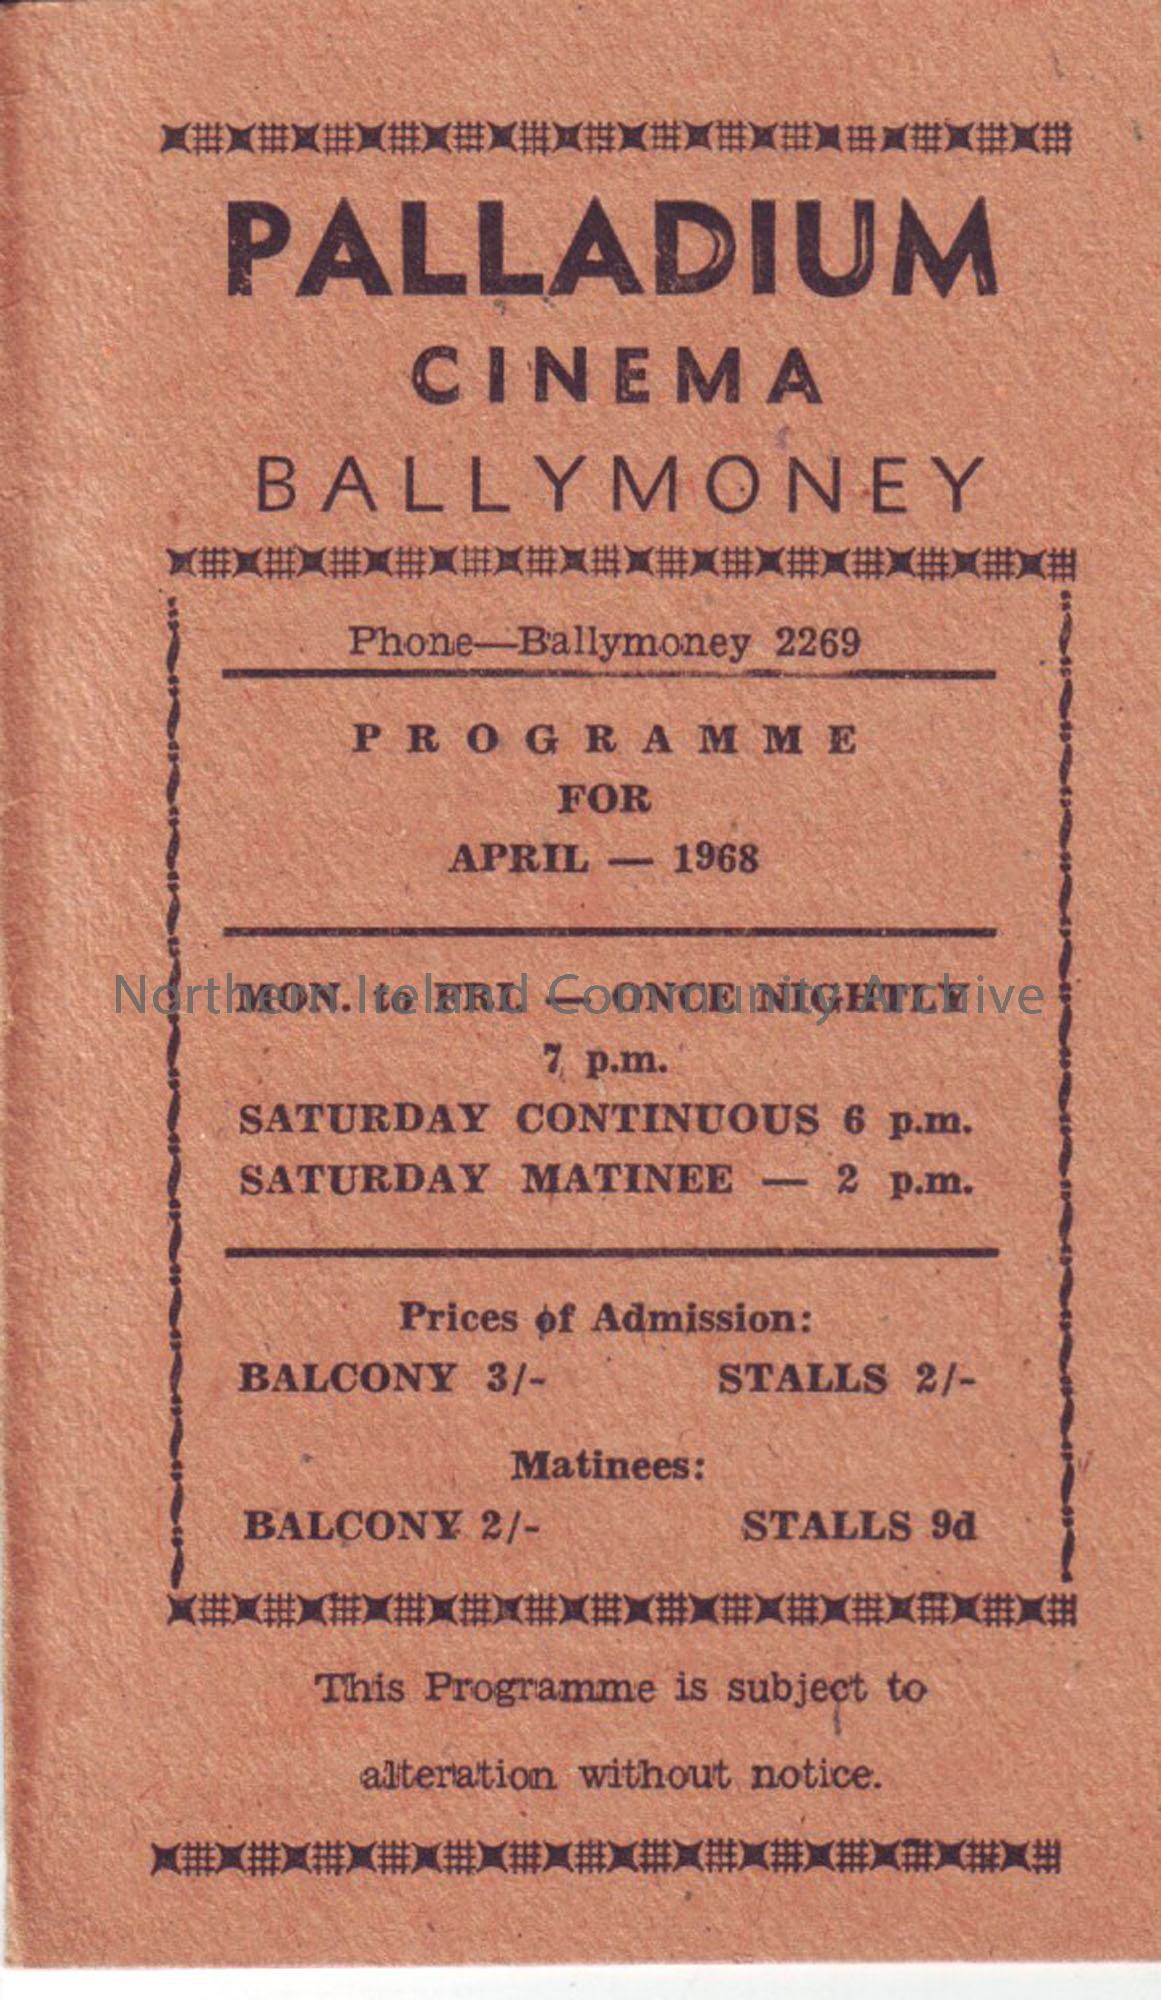 orange monthly programme for Ballymoney Palladium cinema- April 1968